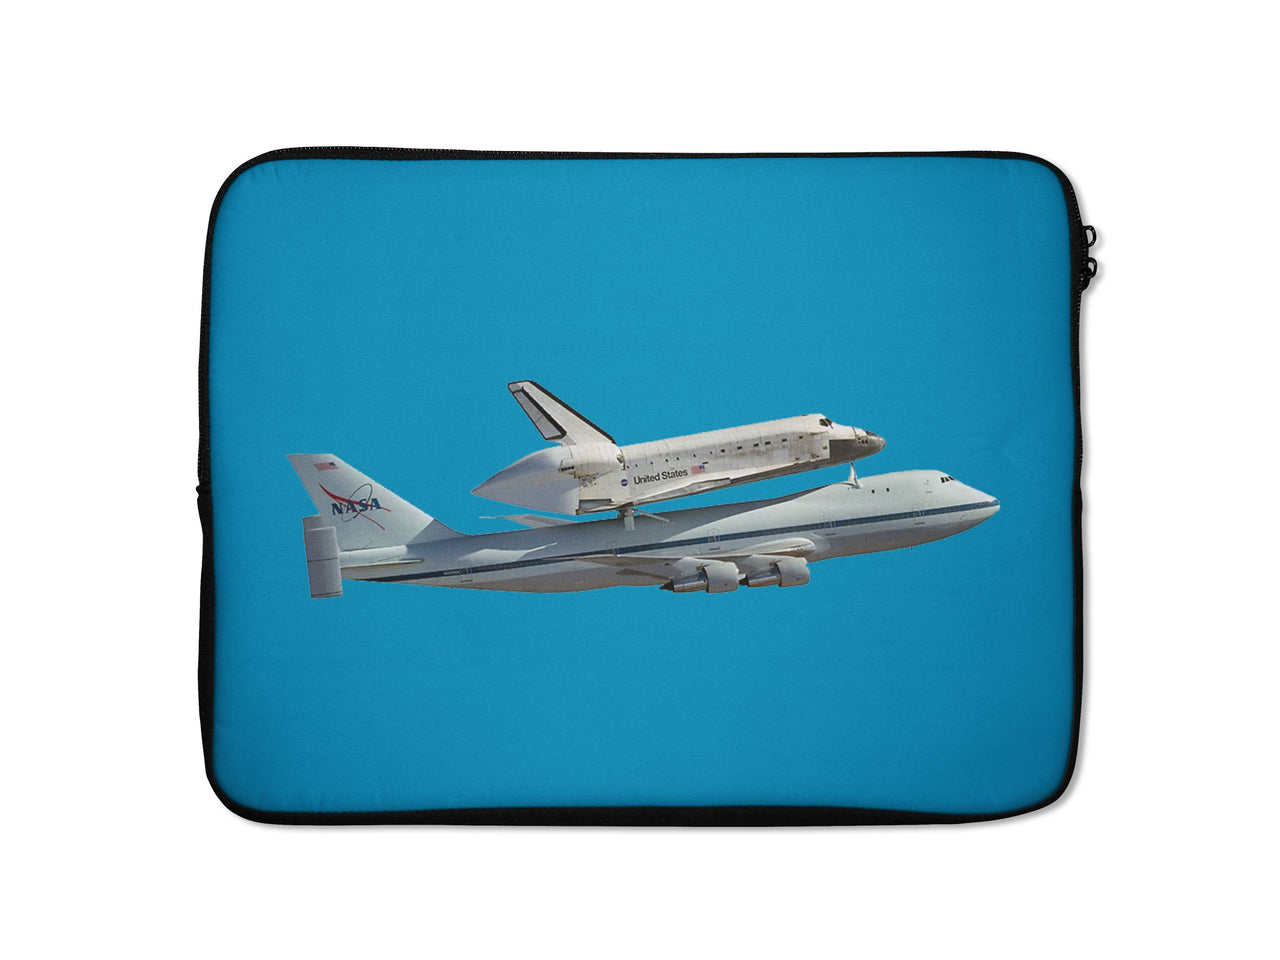 Space shuttle on 747 Designed Laptop & Tablet Cases